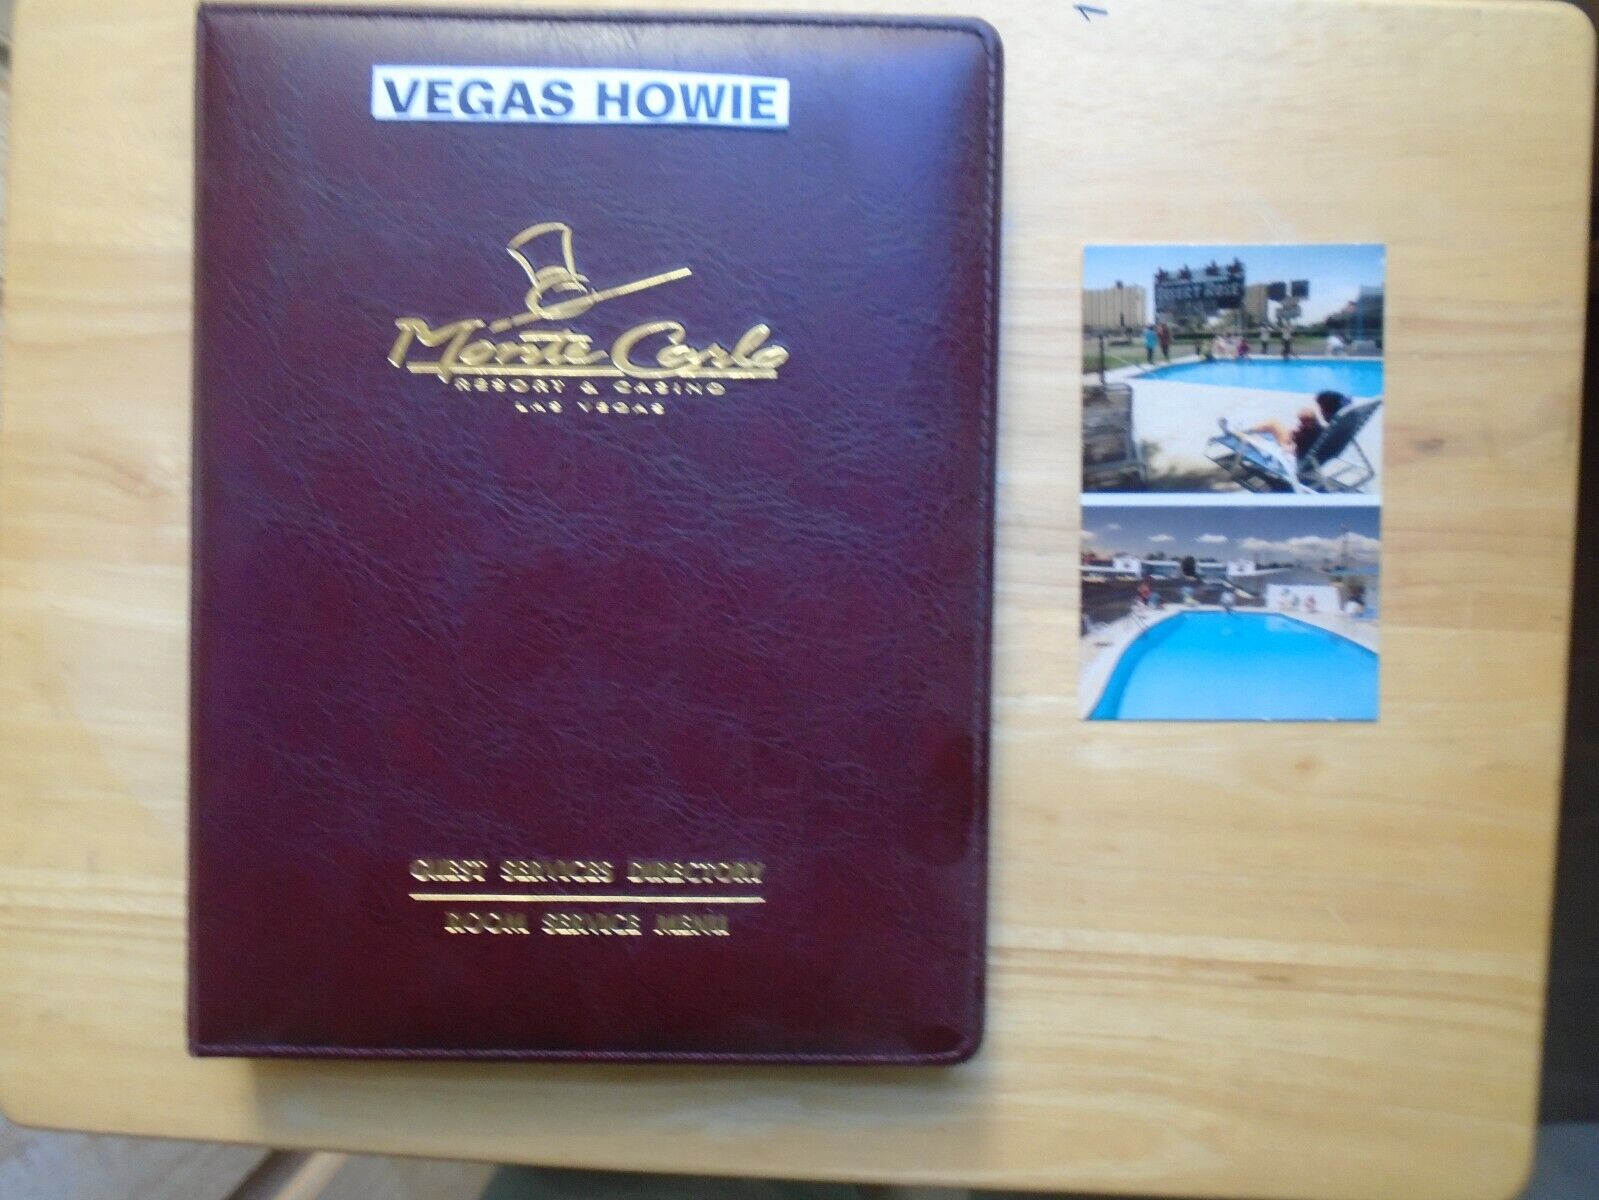  VEGAS HOWIE Desert Rose Motel Photo Postcard Monte Carlo Guest Book Nevada Chip